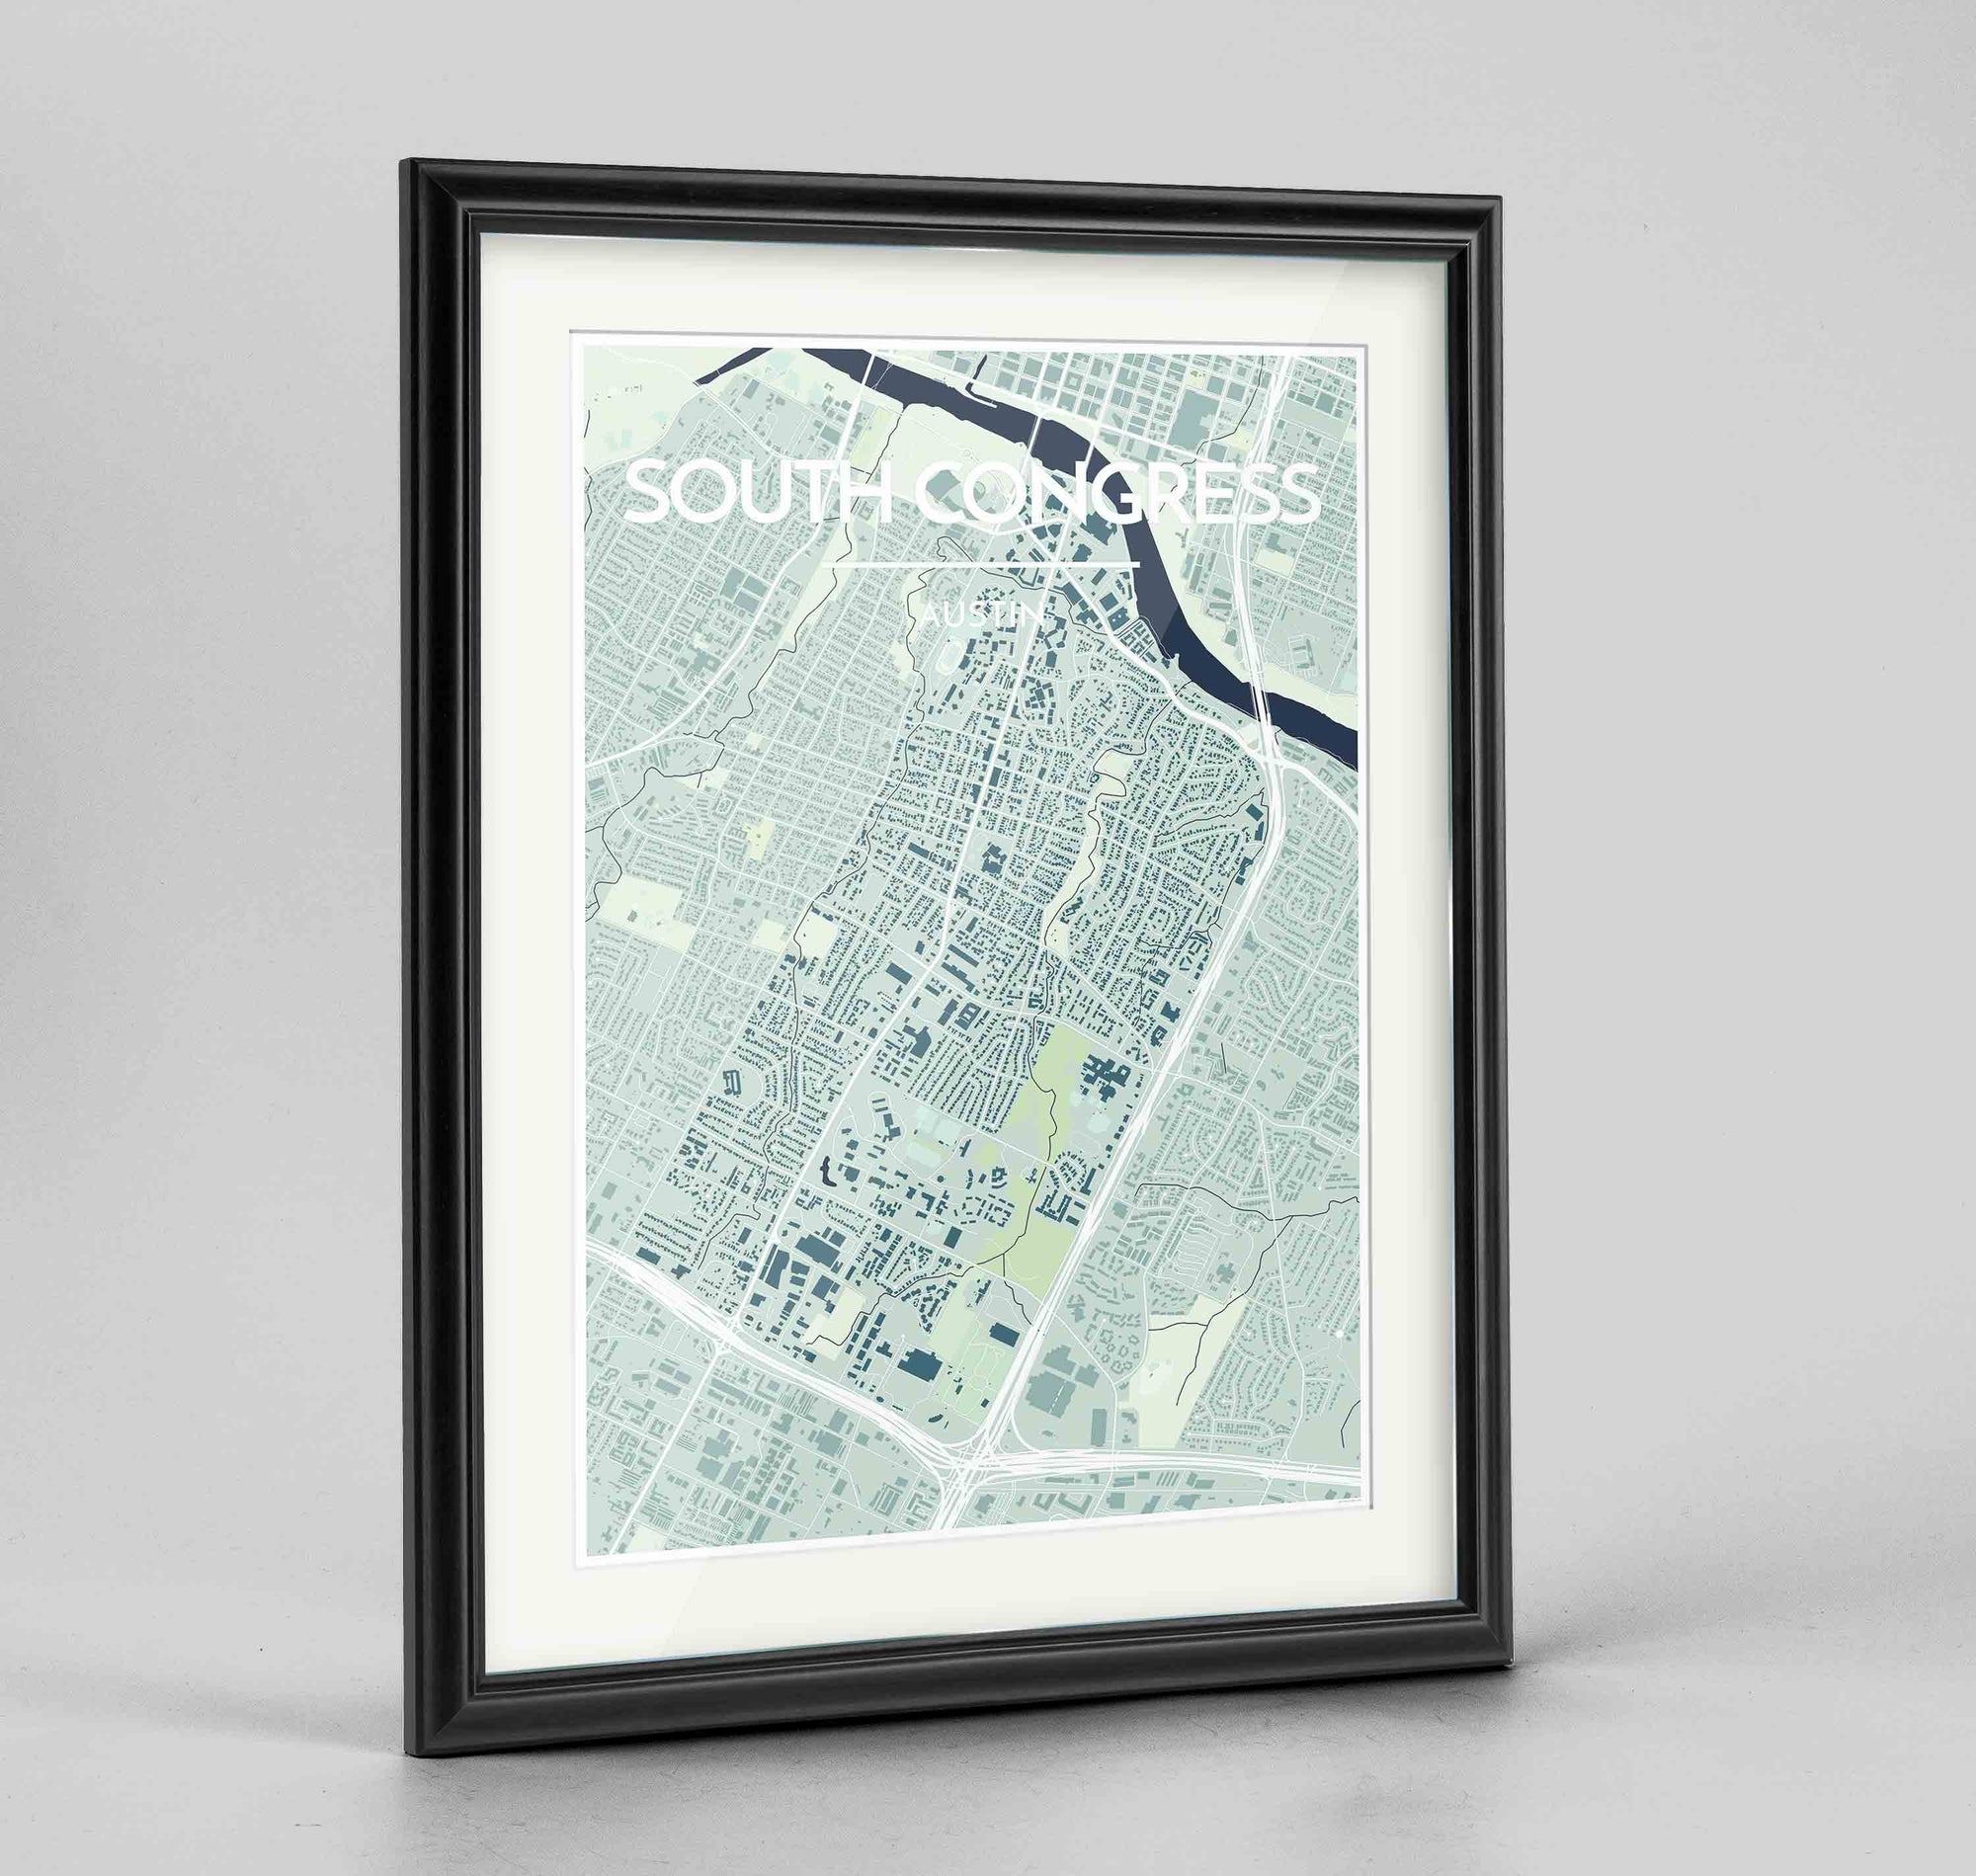 Framed South Congress Neighbourhood of Austin Map Art Print 24x36" Traditional Black frame Point Two Design Group